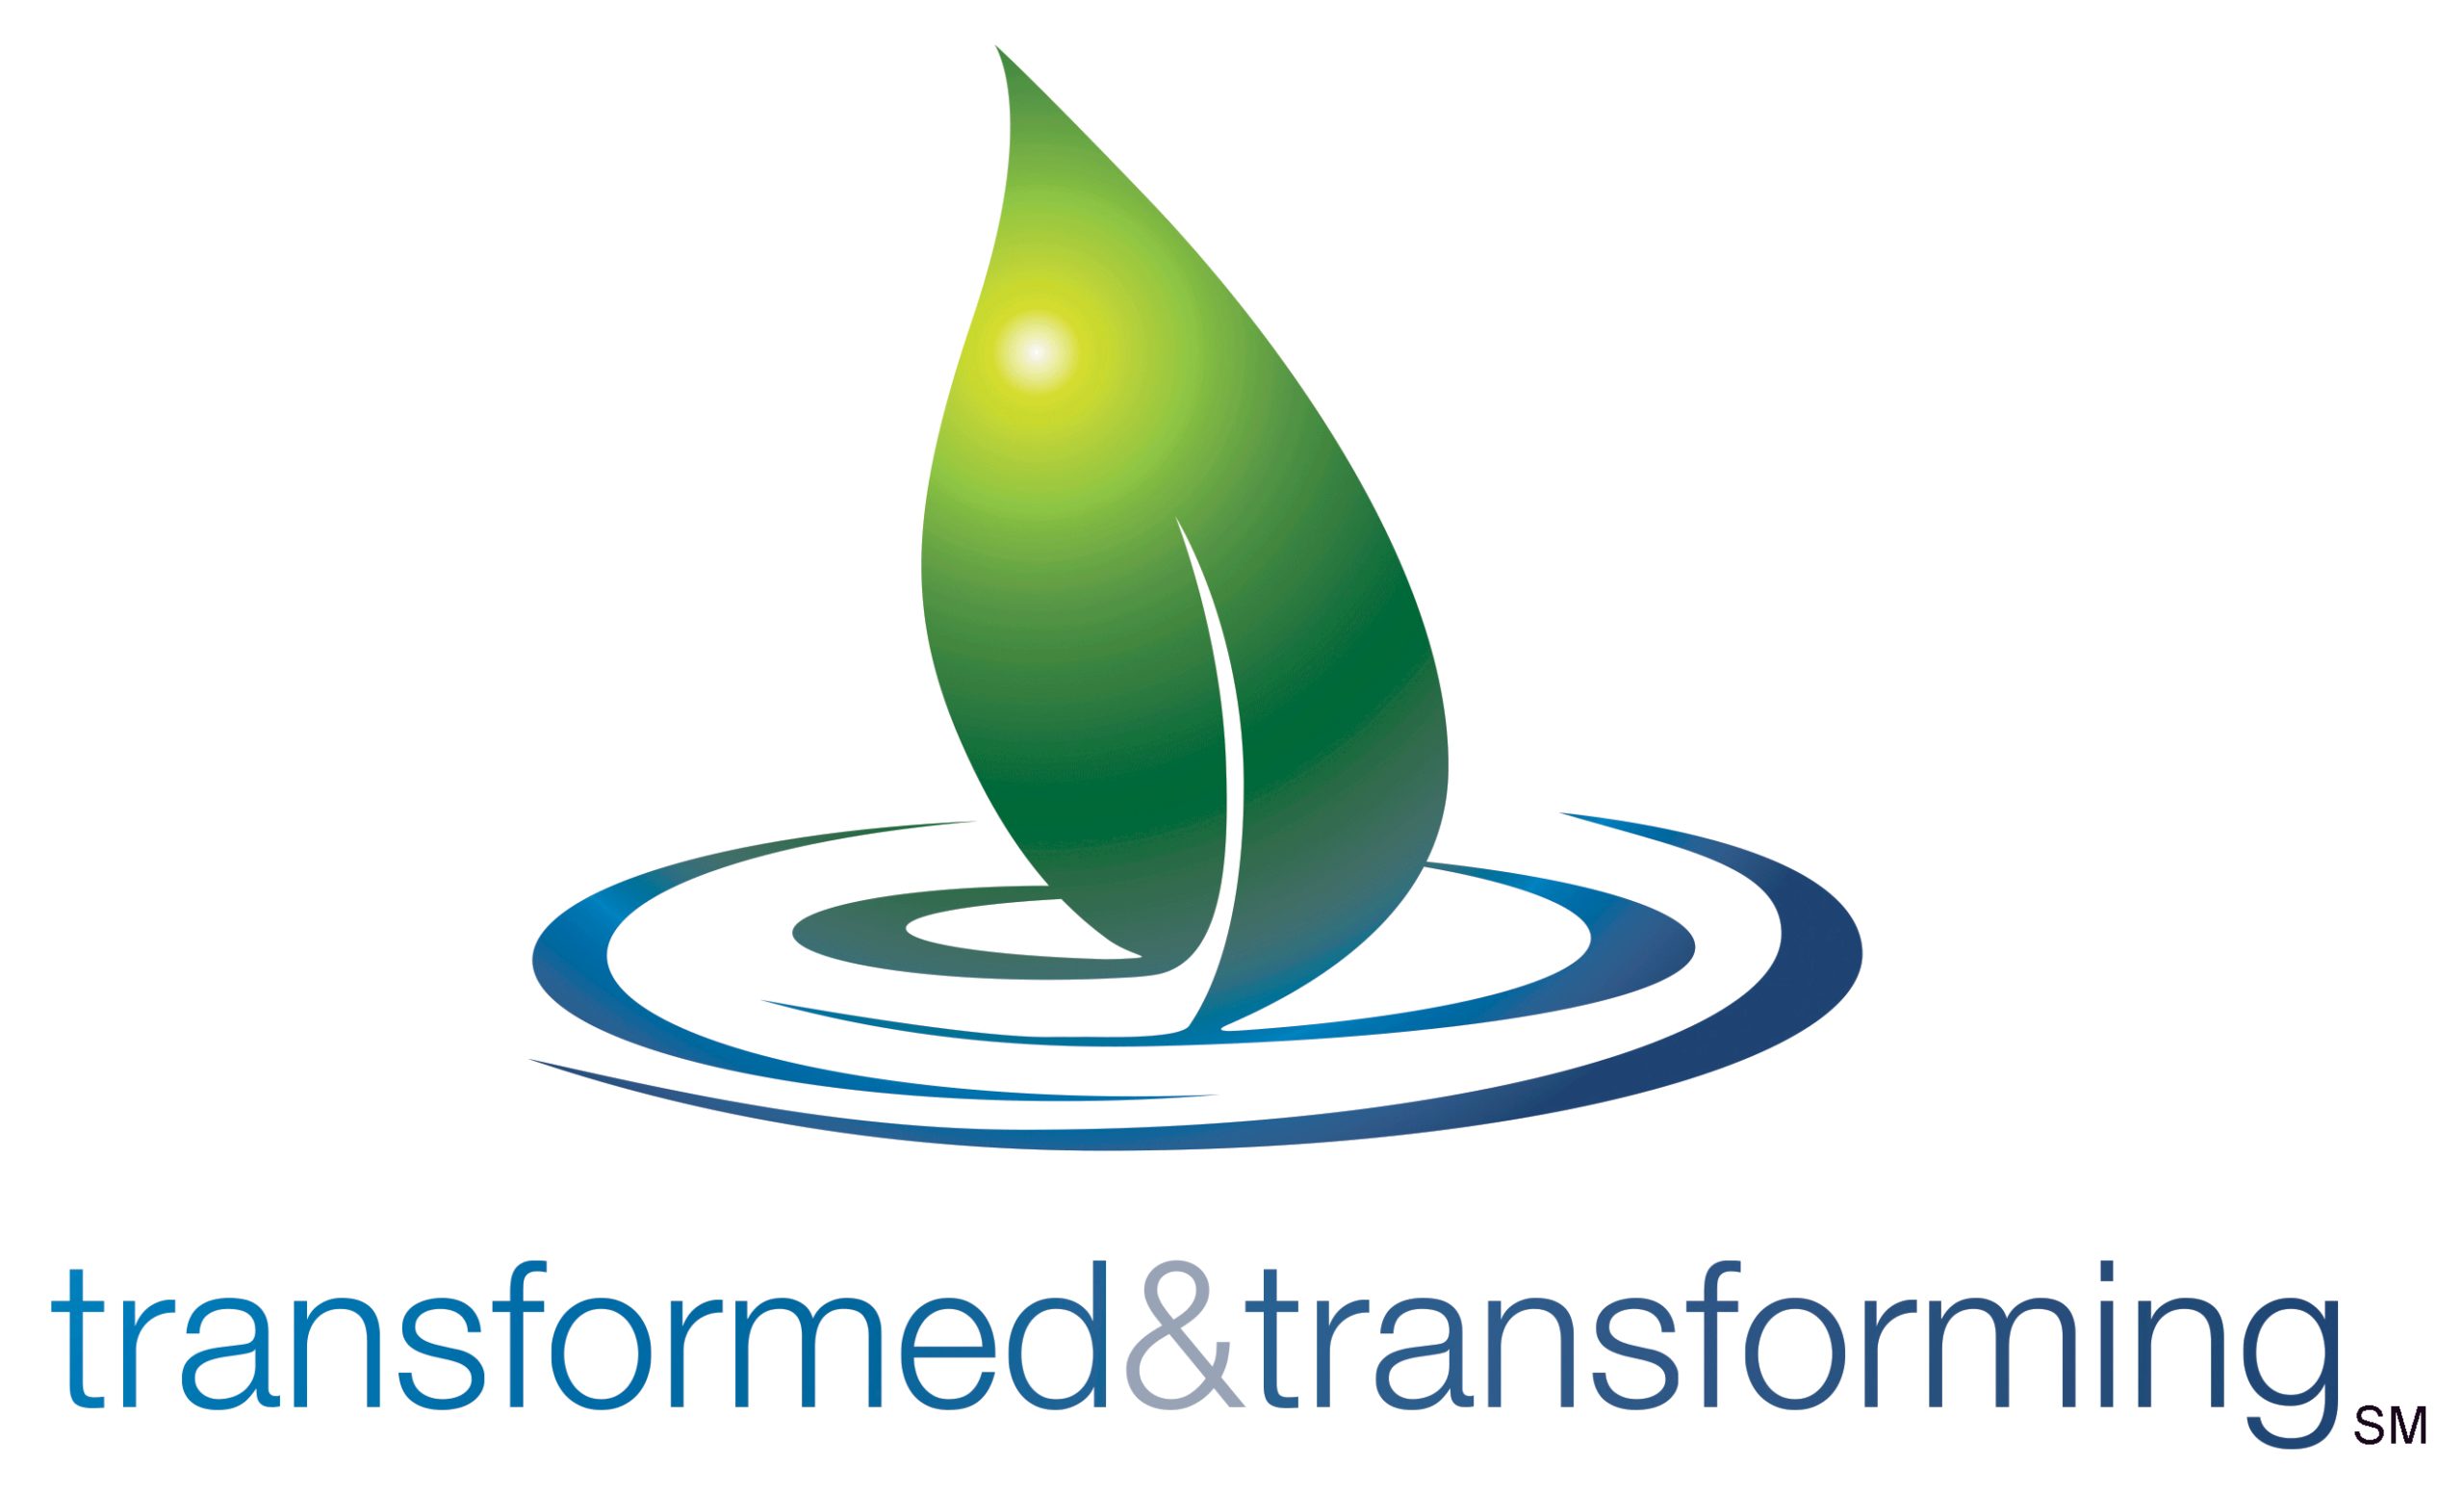 Living into Transformed & Transforming: Fall 2014